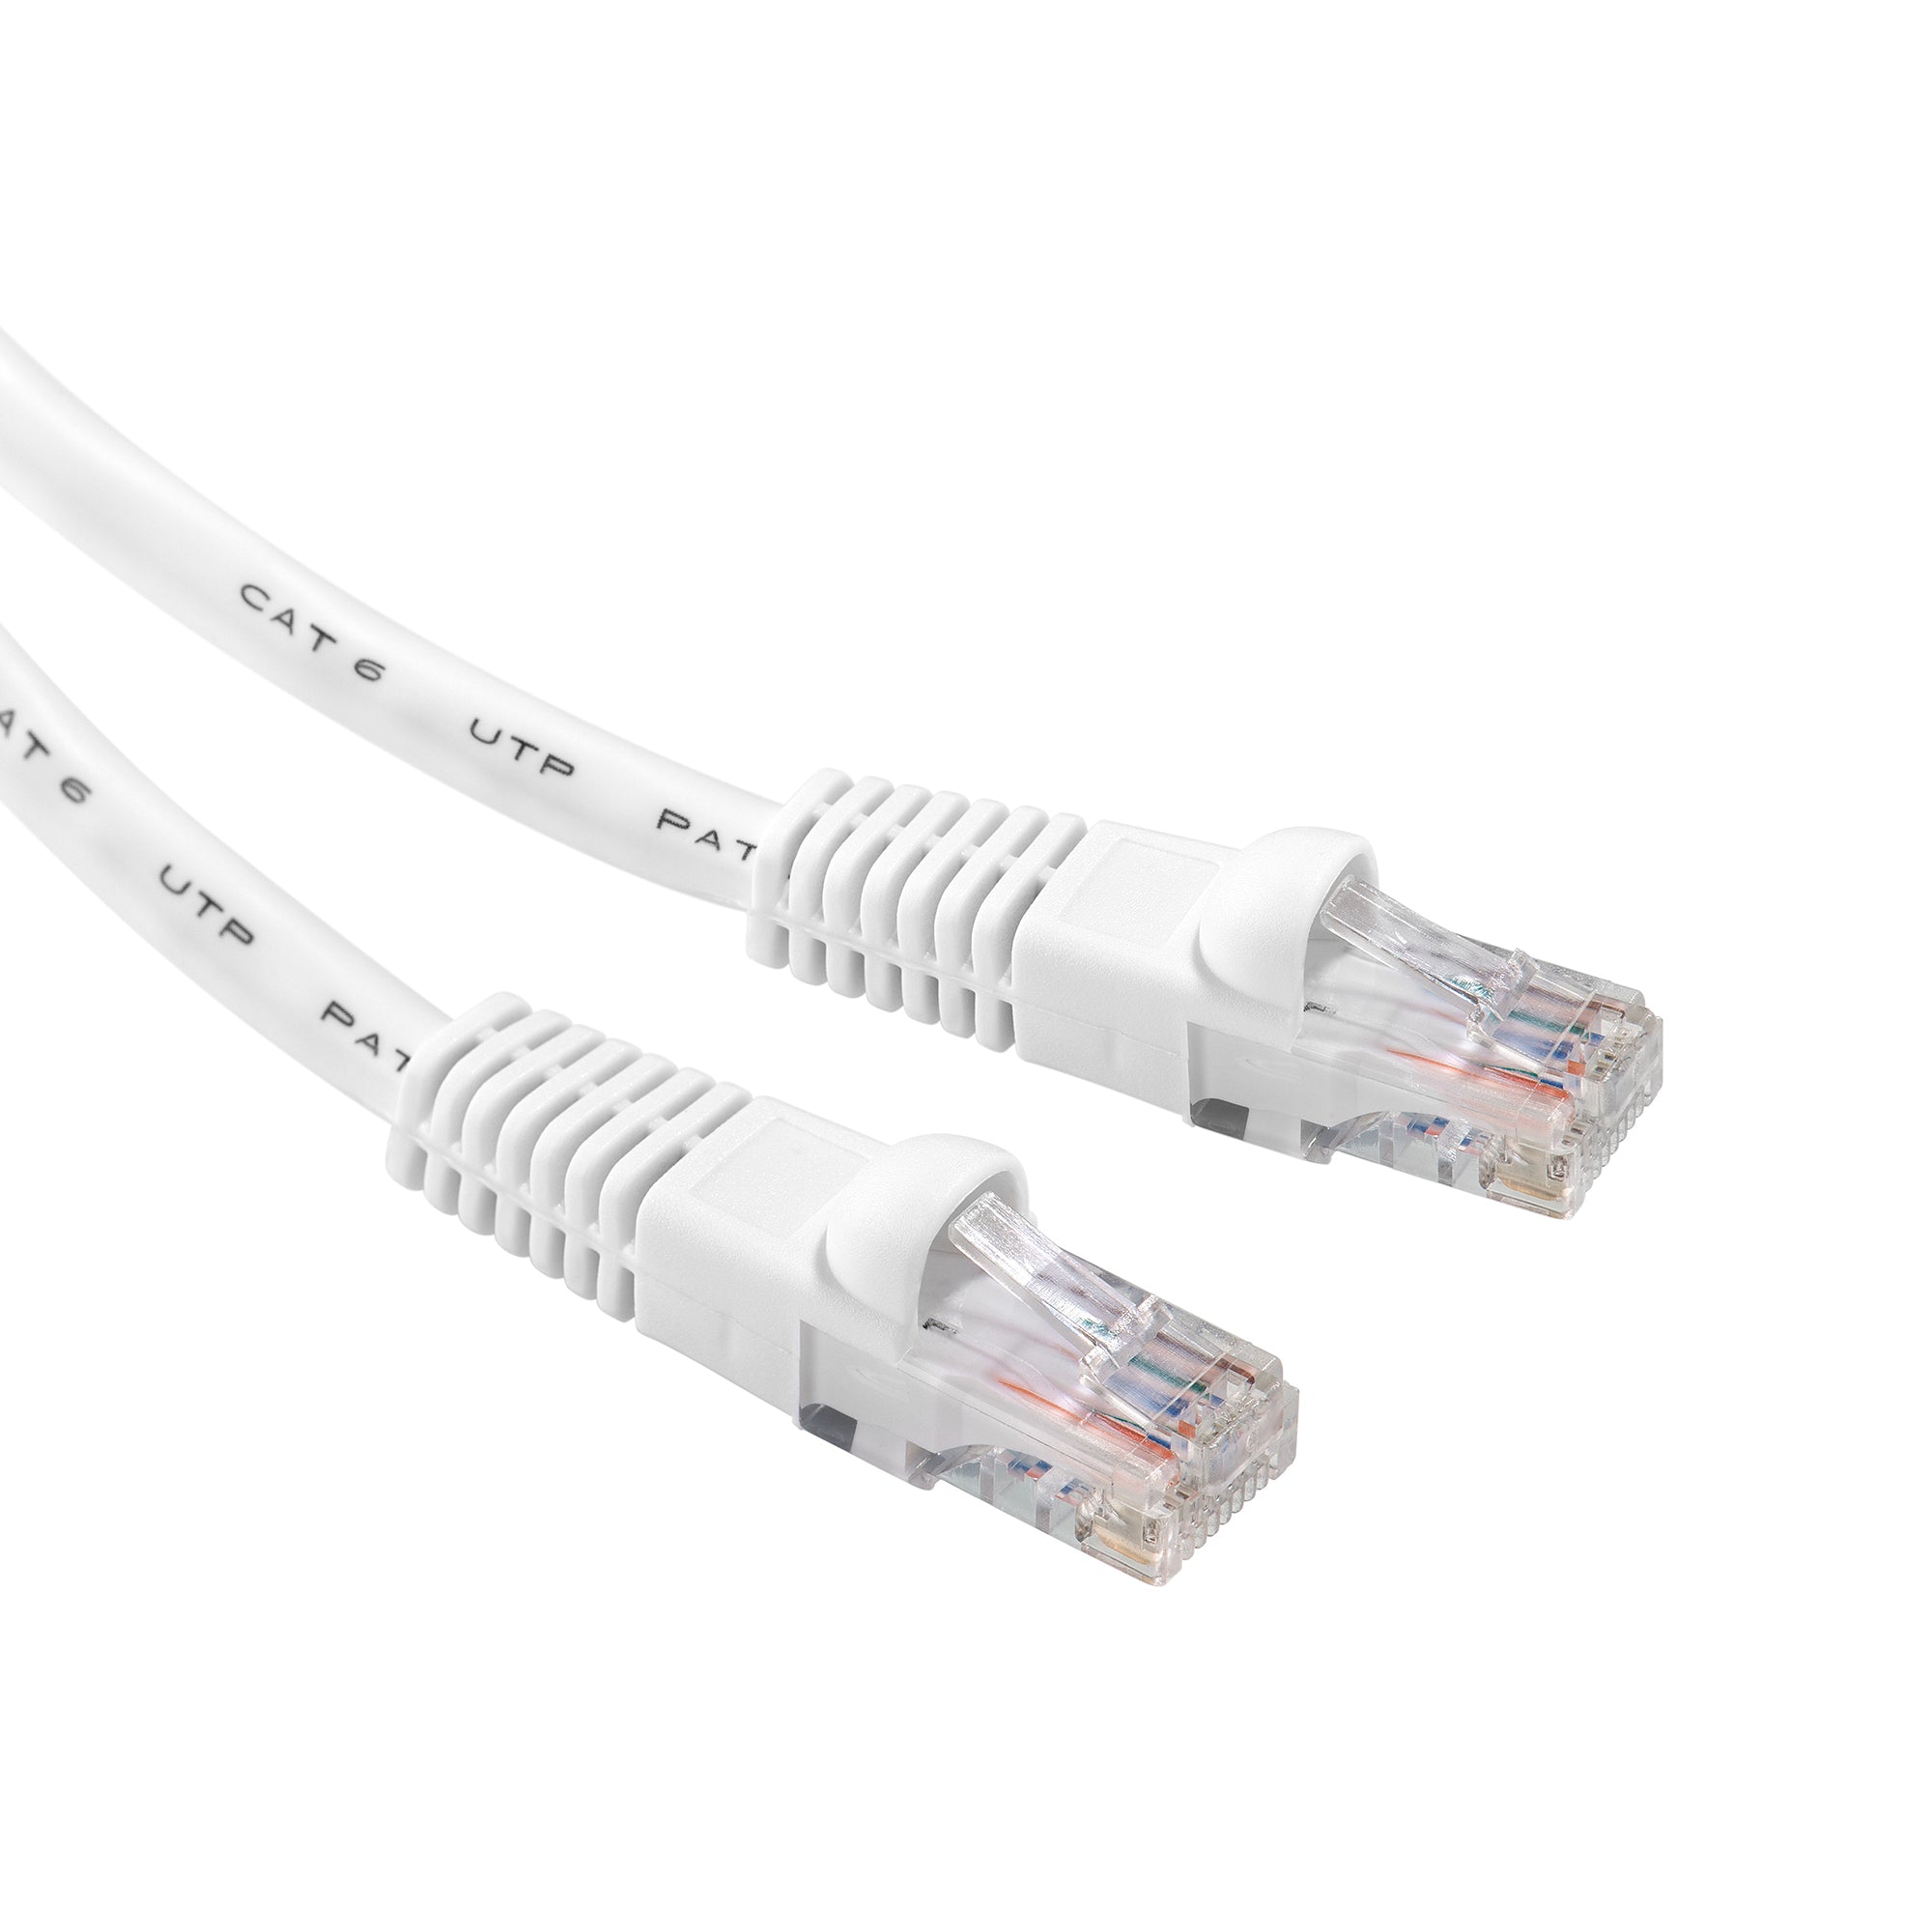 2m CAT6 RJ45 Ethernet Network Cable